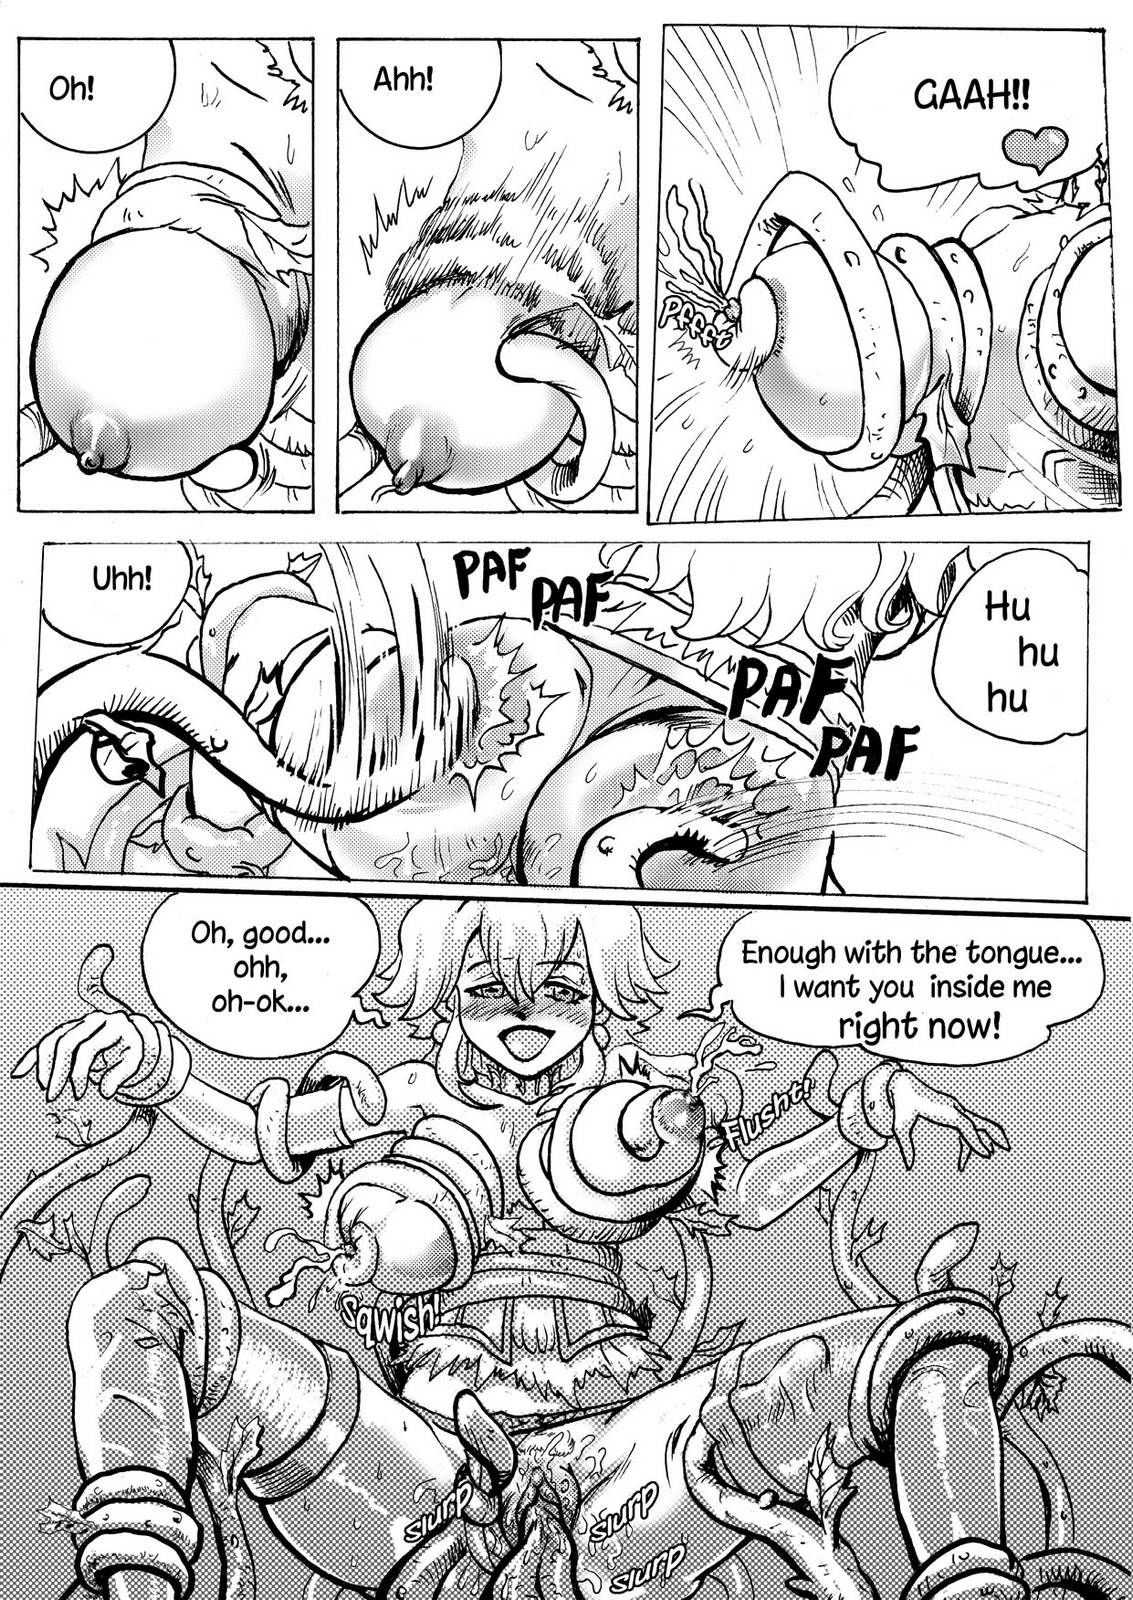 Super Wild Adventure 2 by Saikyo3B page 7